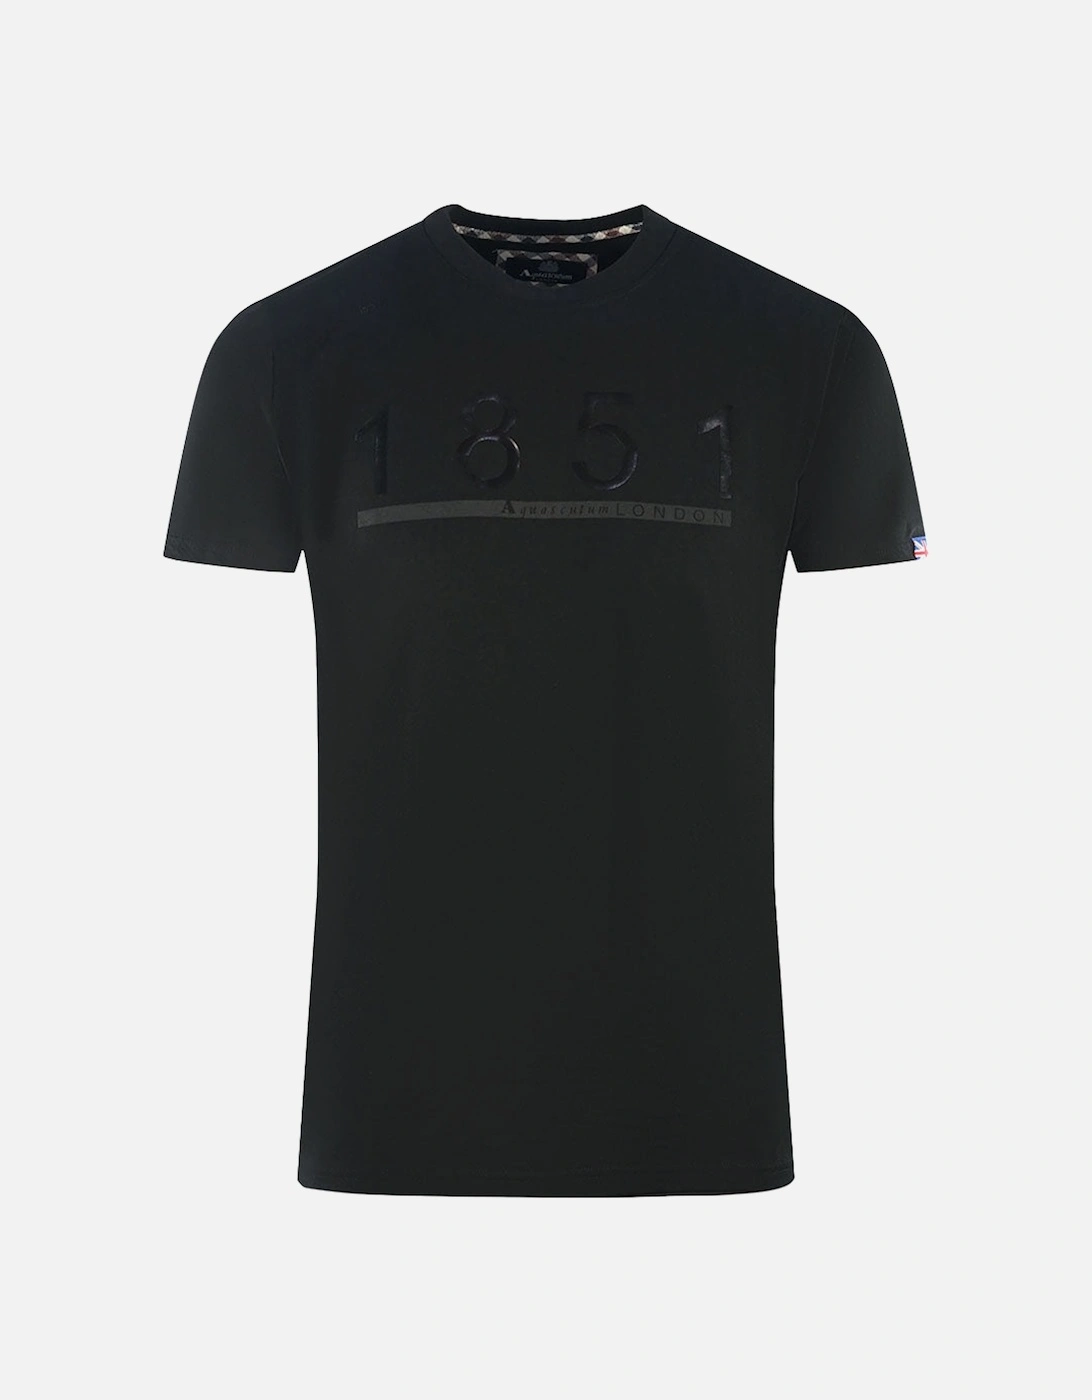 London 1851 Black T-Shirt, 4 of 3